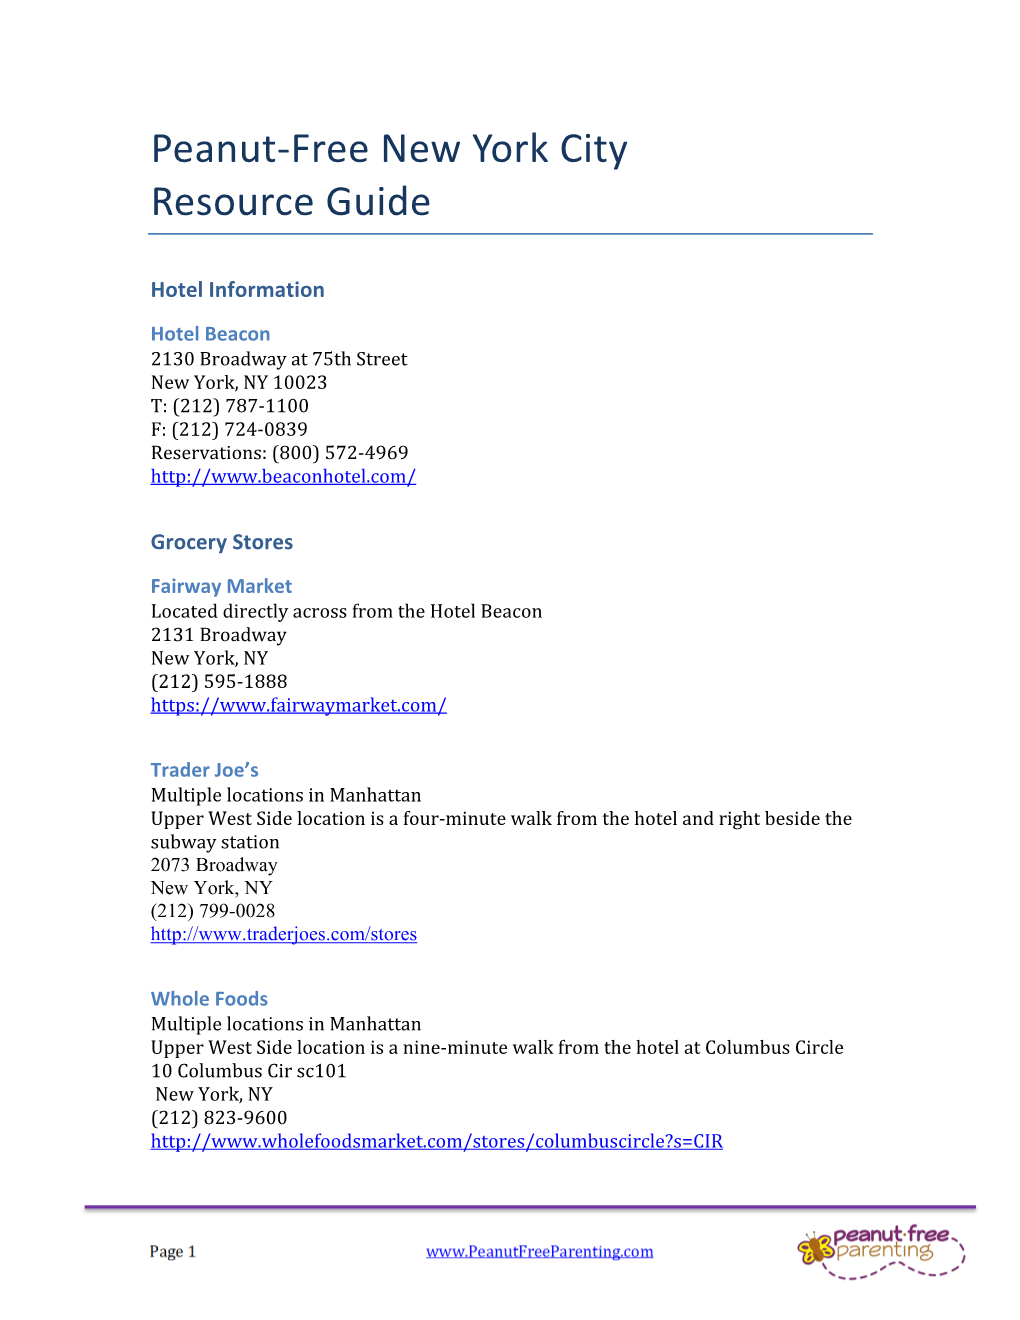 Peanut-Free New York City Resource Guide